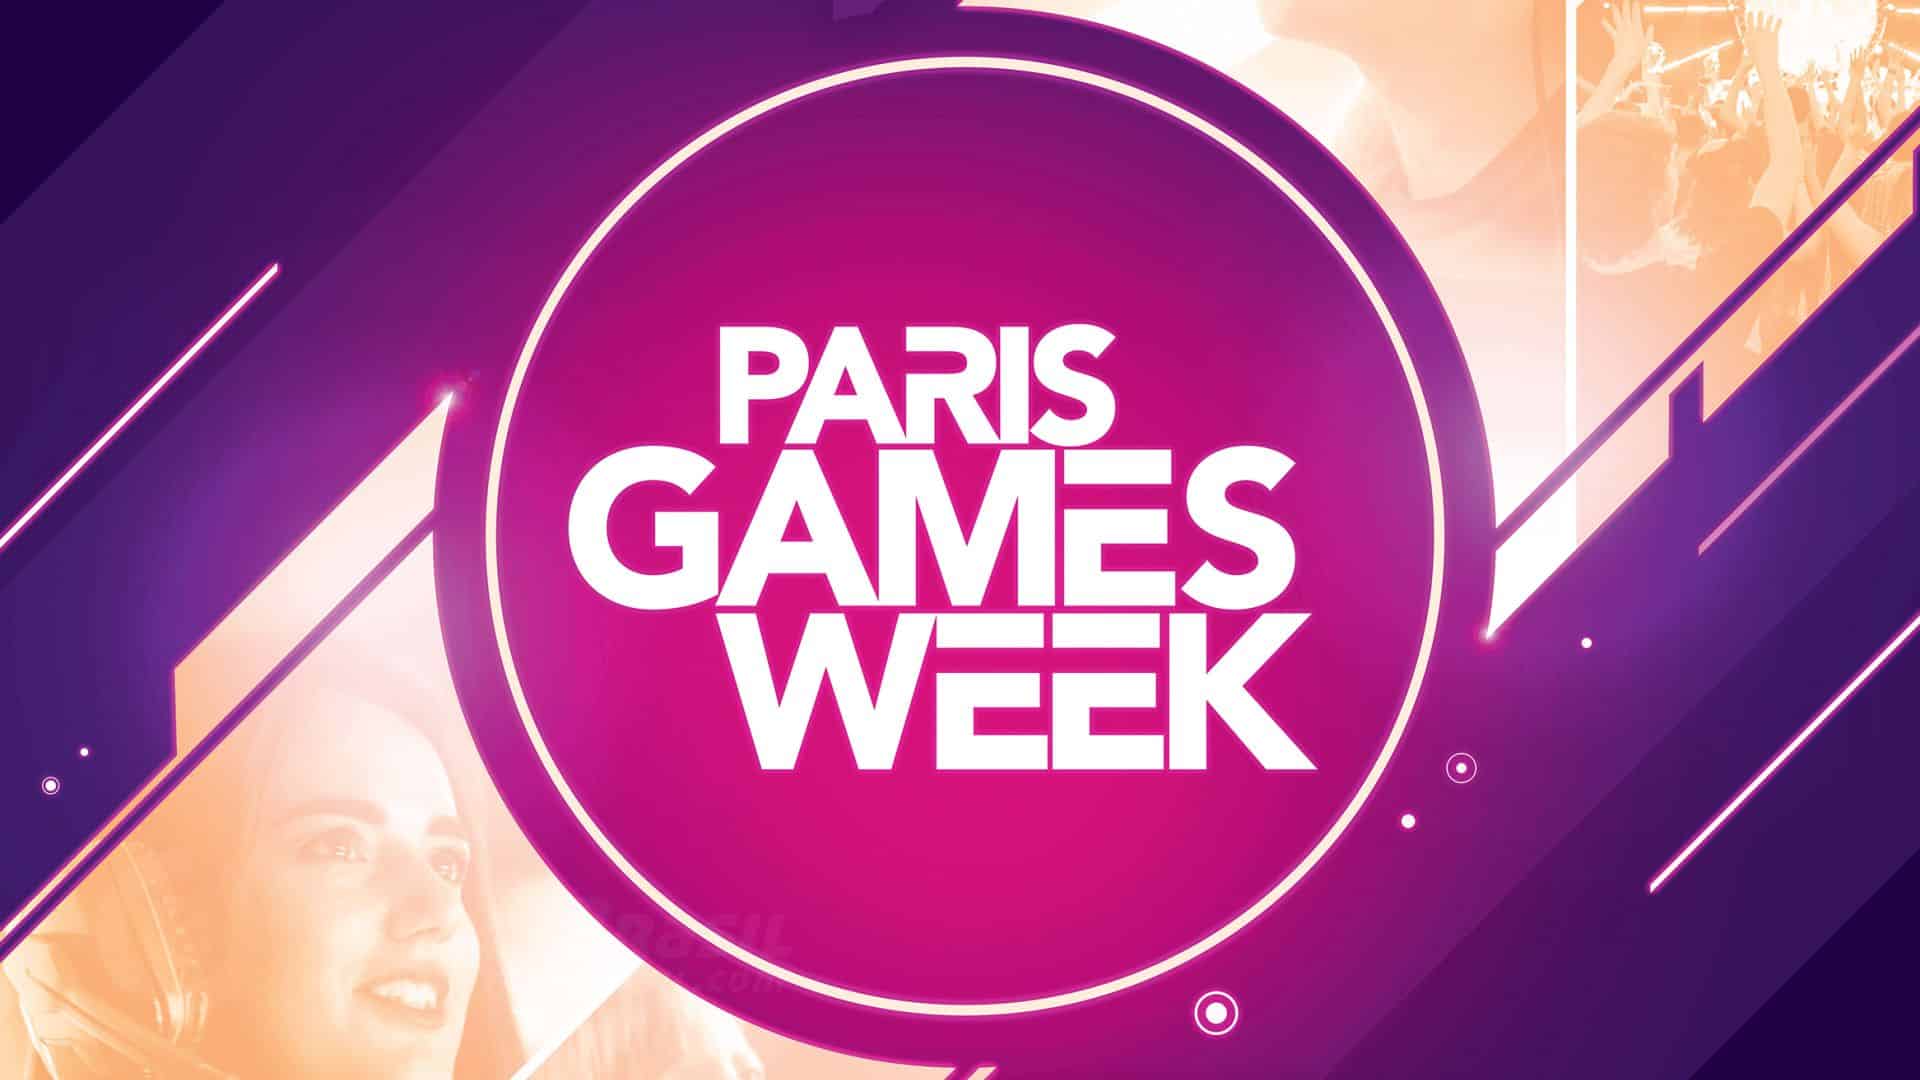 Paris games week 2020 também está cancelada | d240362f paris games week scrn07052020 | tencent | paris games week tencent